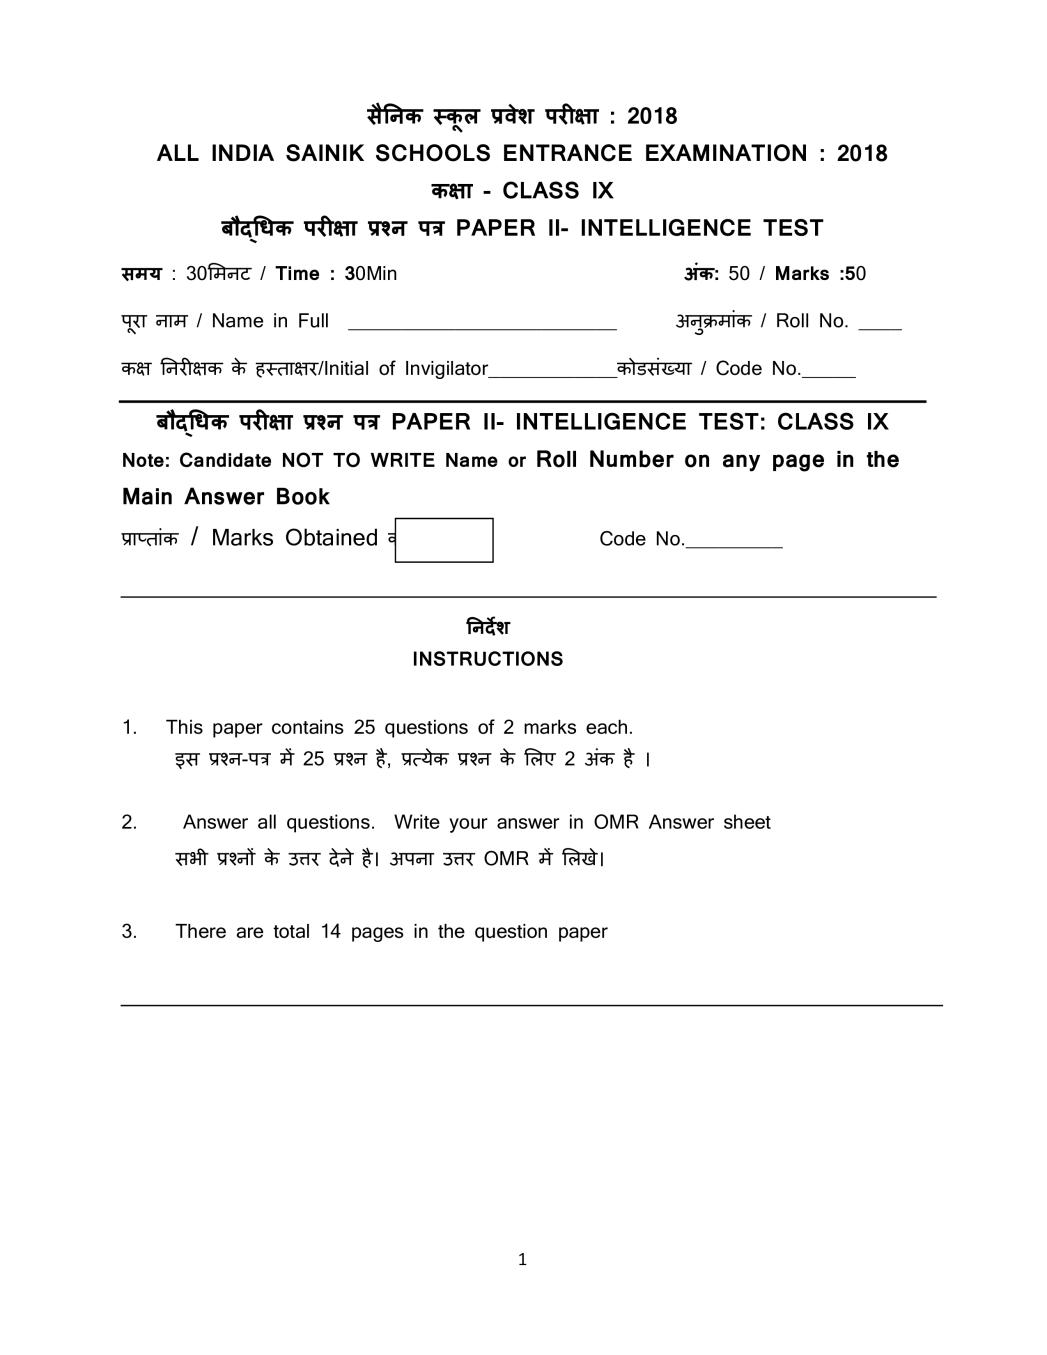 AISSEE 2018 Question Paper for Class 9 |  Sainik School Entrance Exam (Paper 2) - Page 1